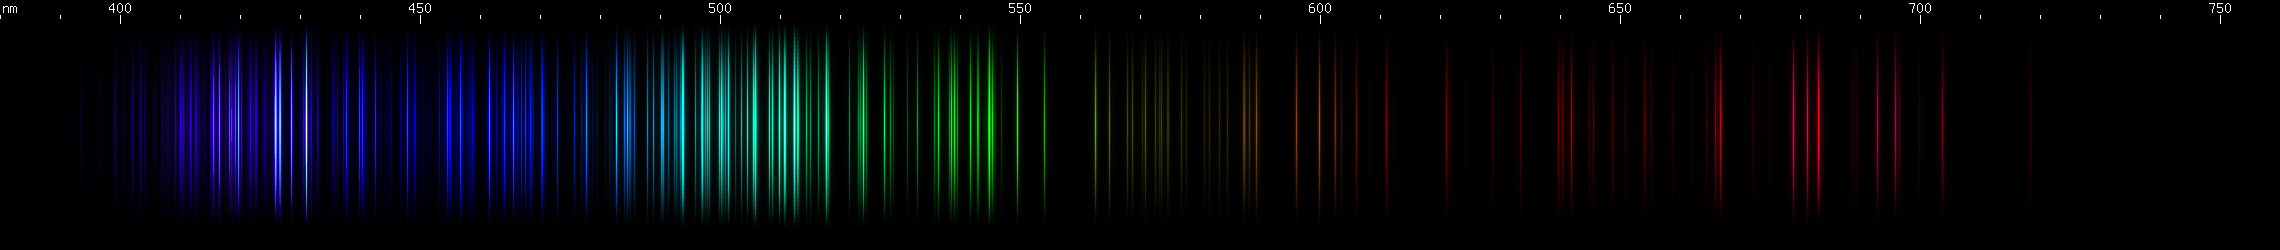 Spectral Lines of Iridium